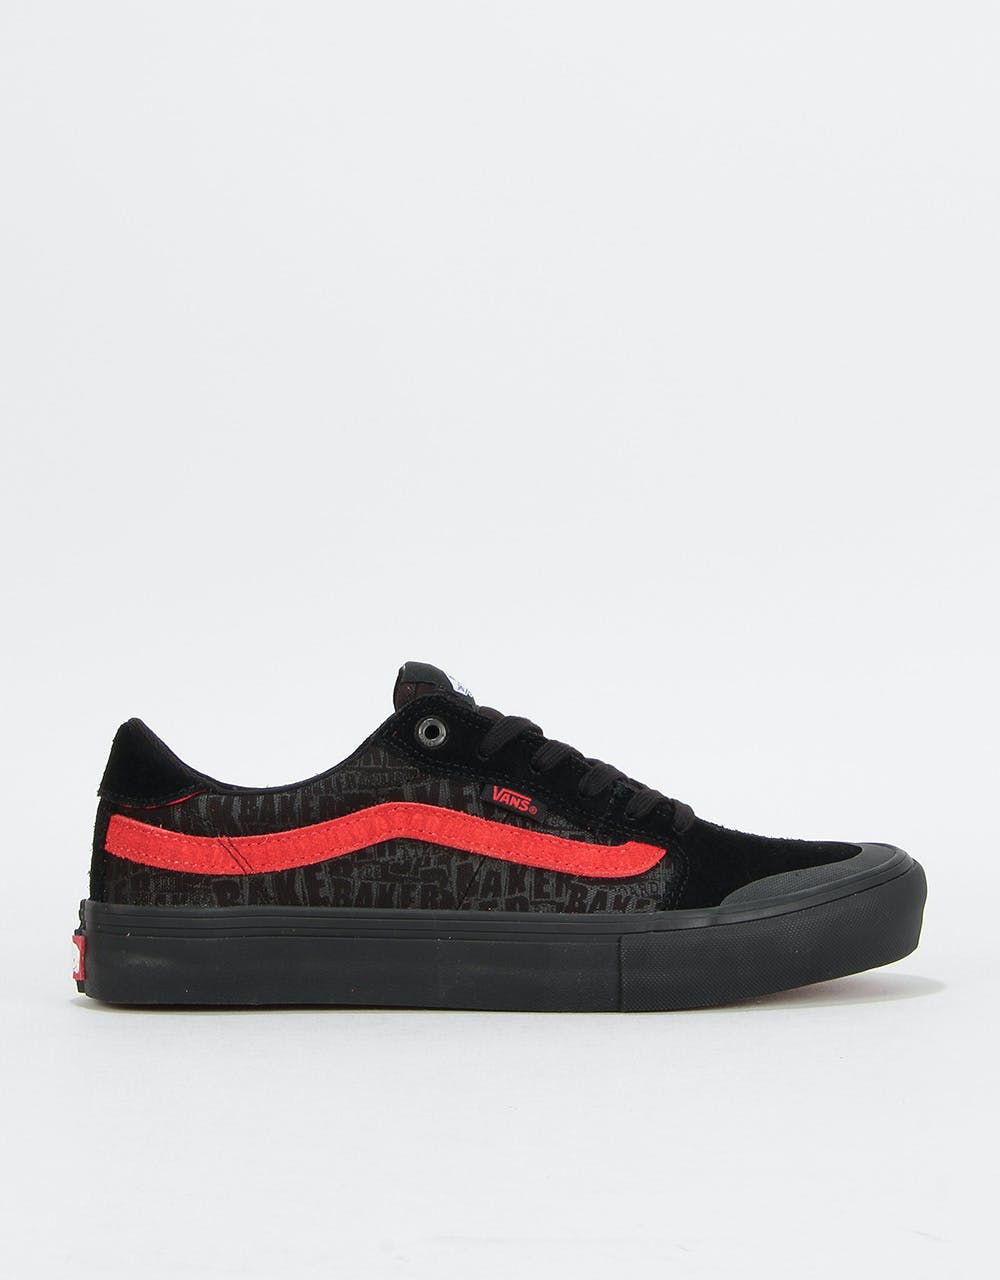 Vans Style 112 Pro Skate Shoes - (Baker) Black/Black/Red